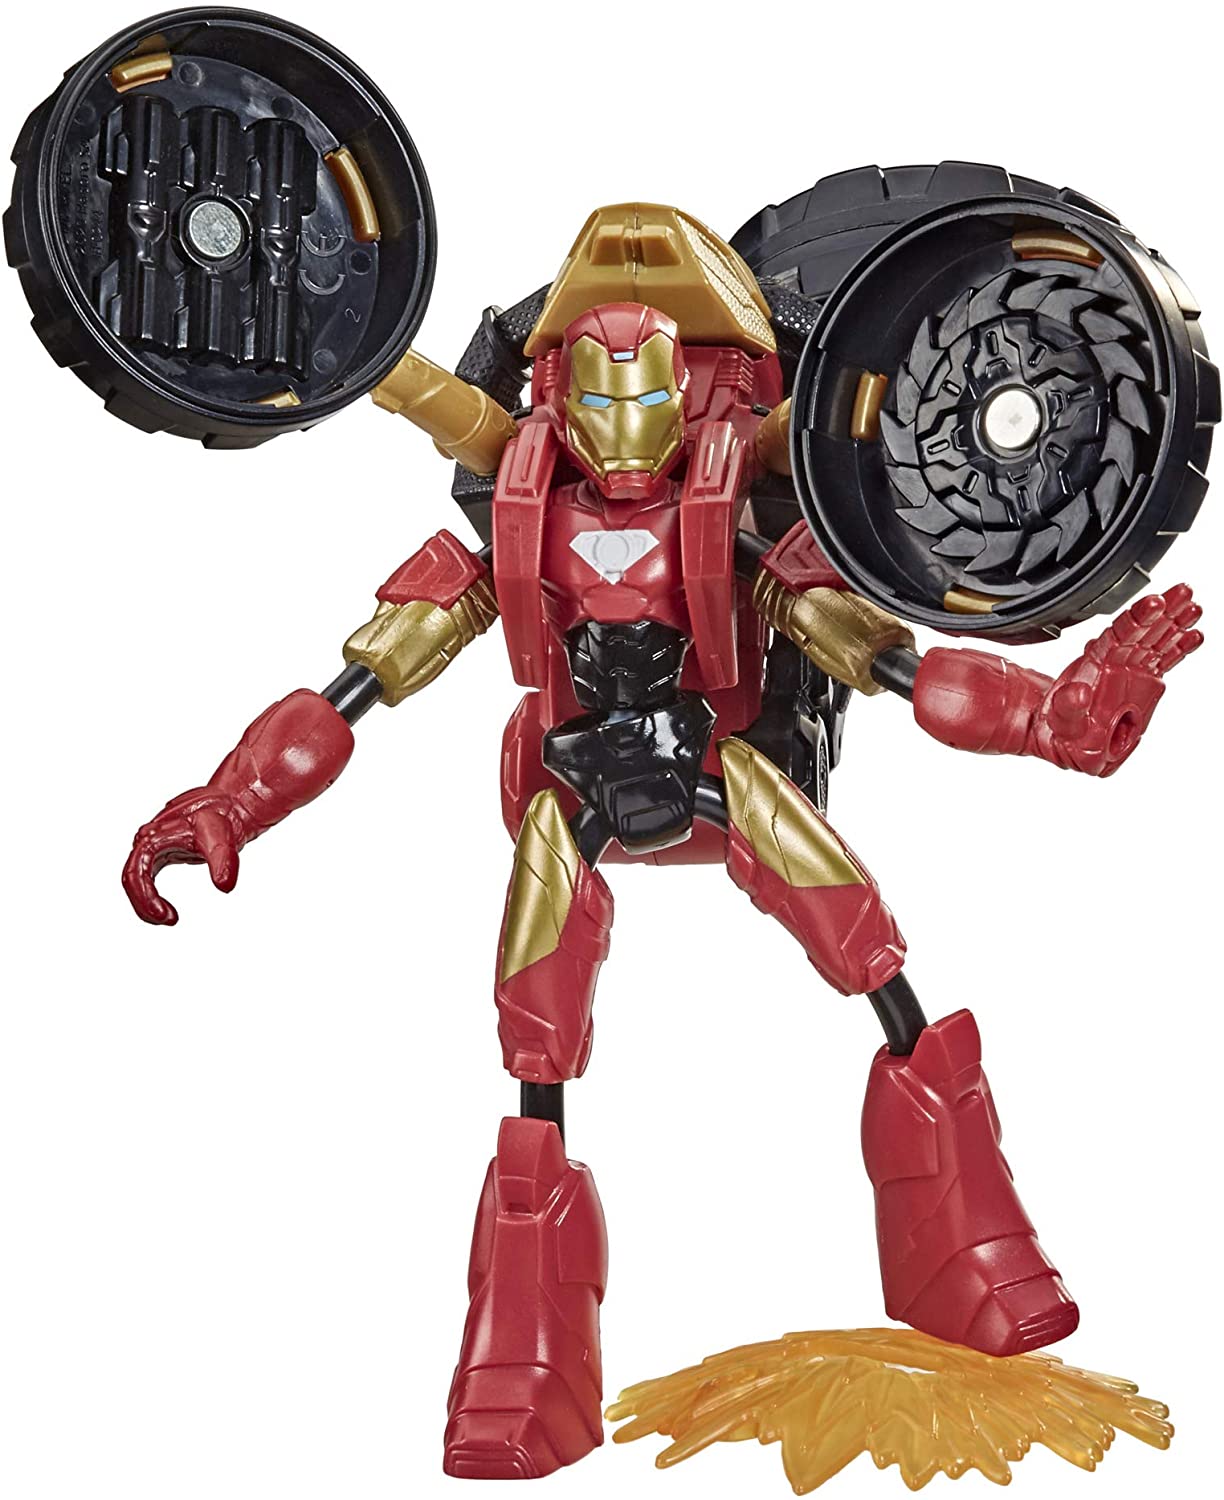 Iron-Man bend and flex con moto